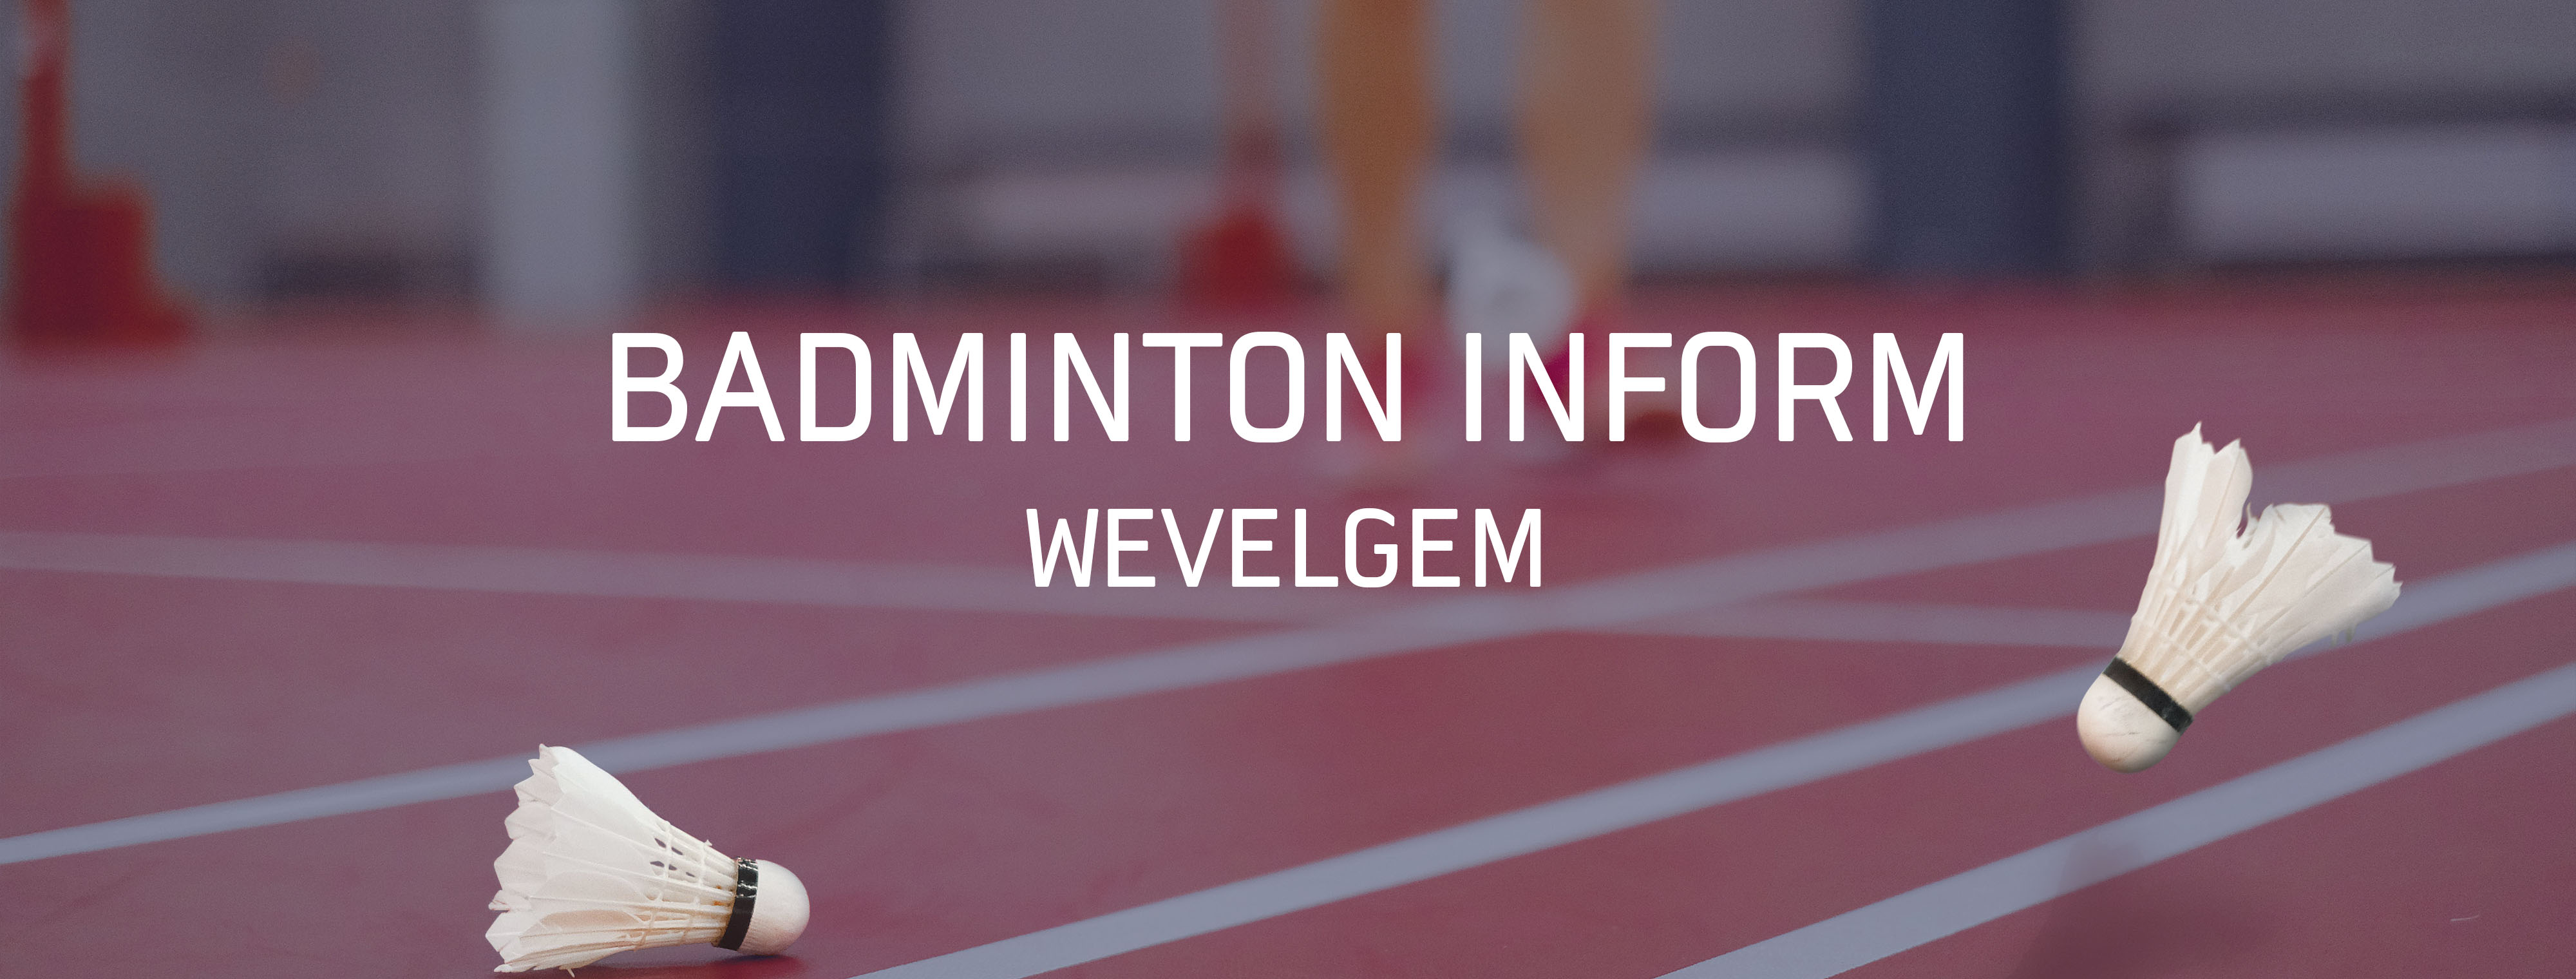 badminton-inform